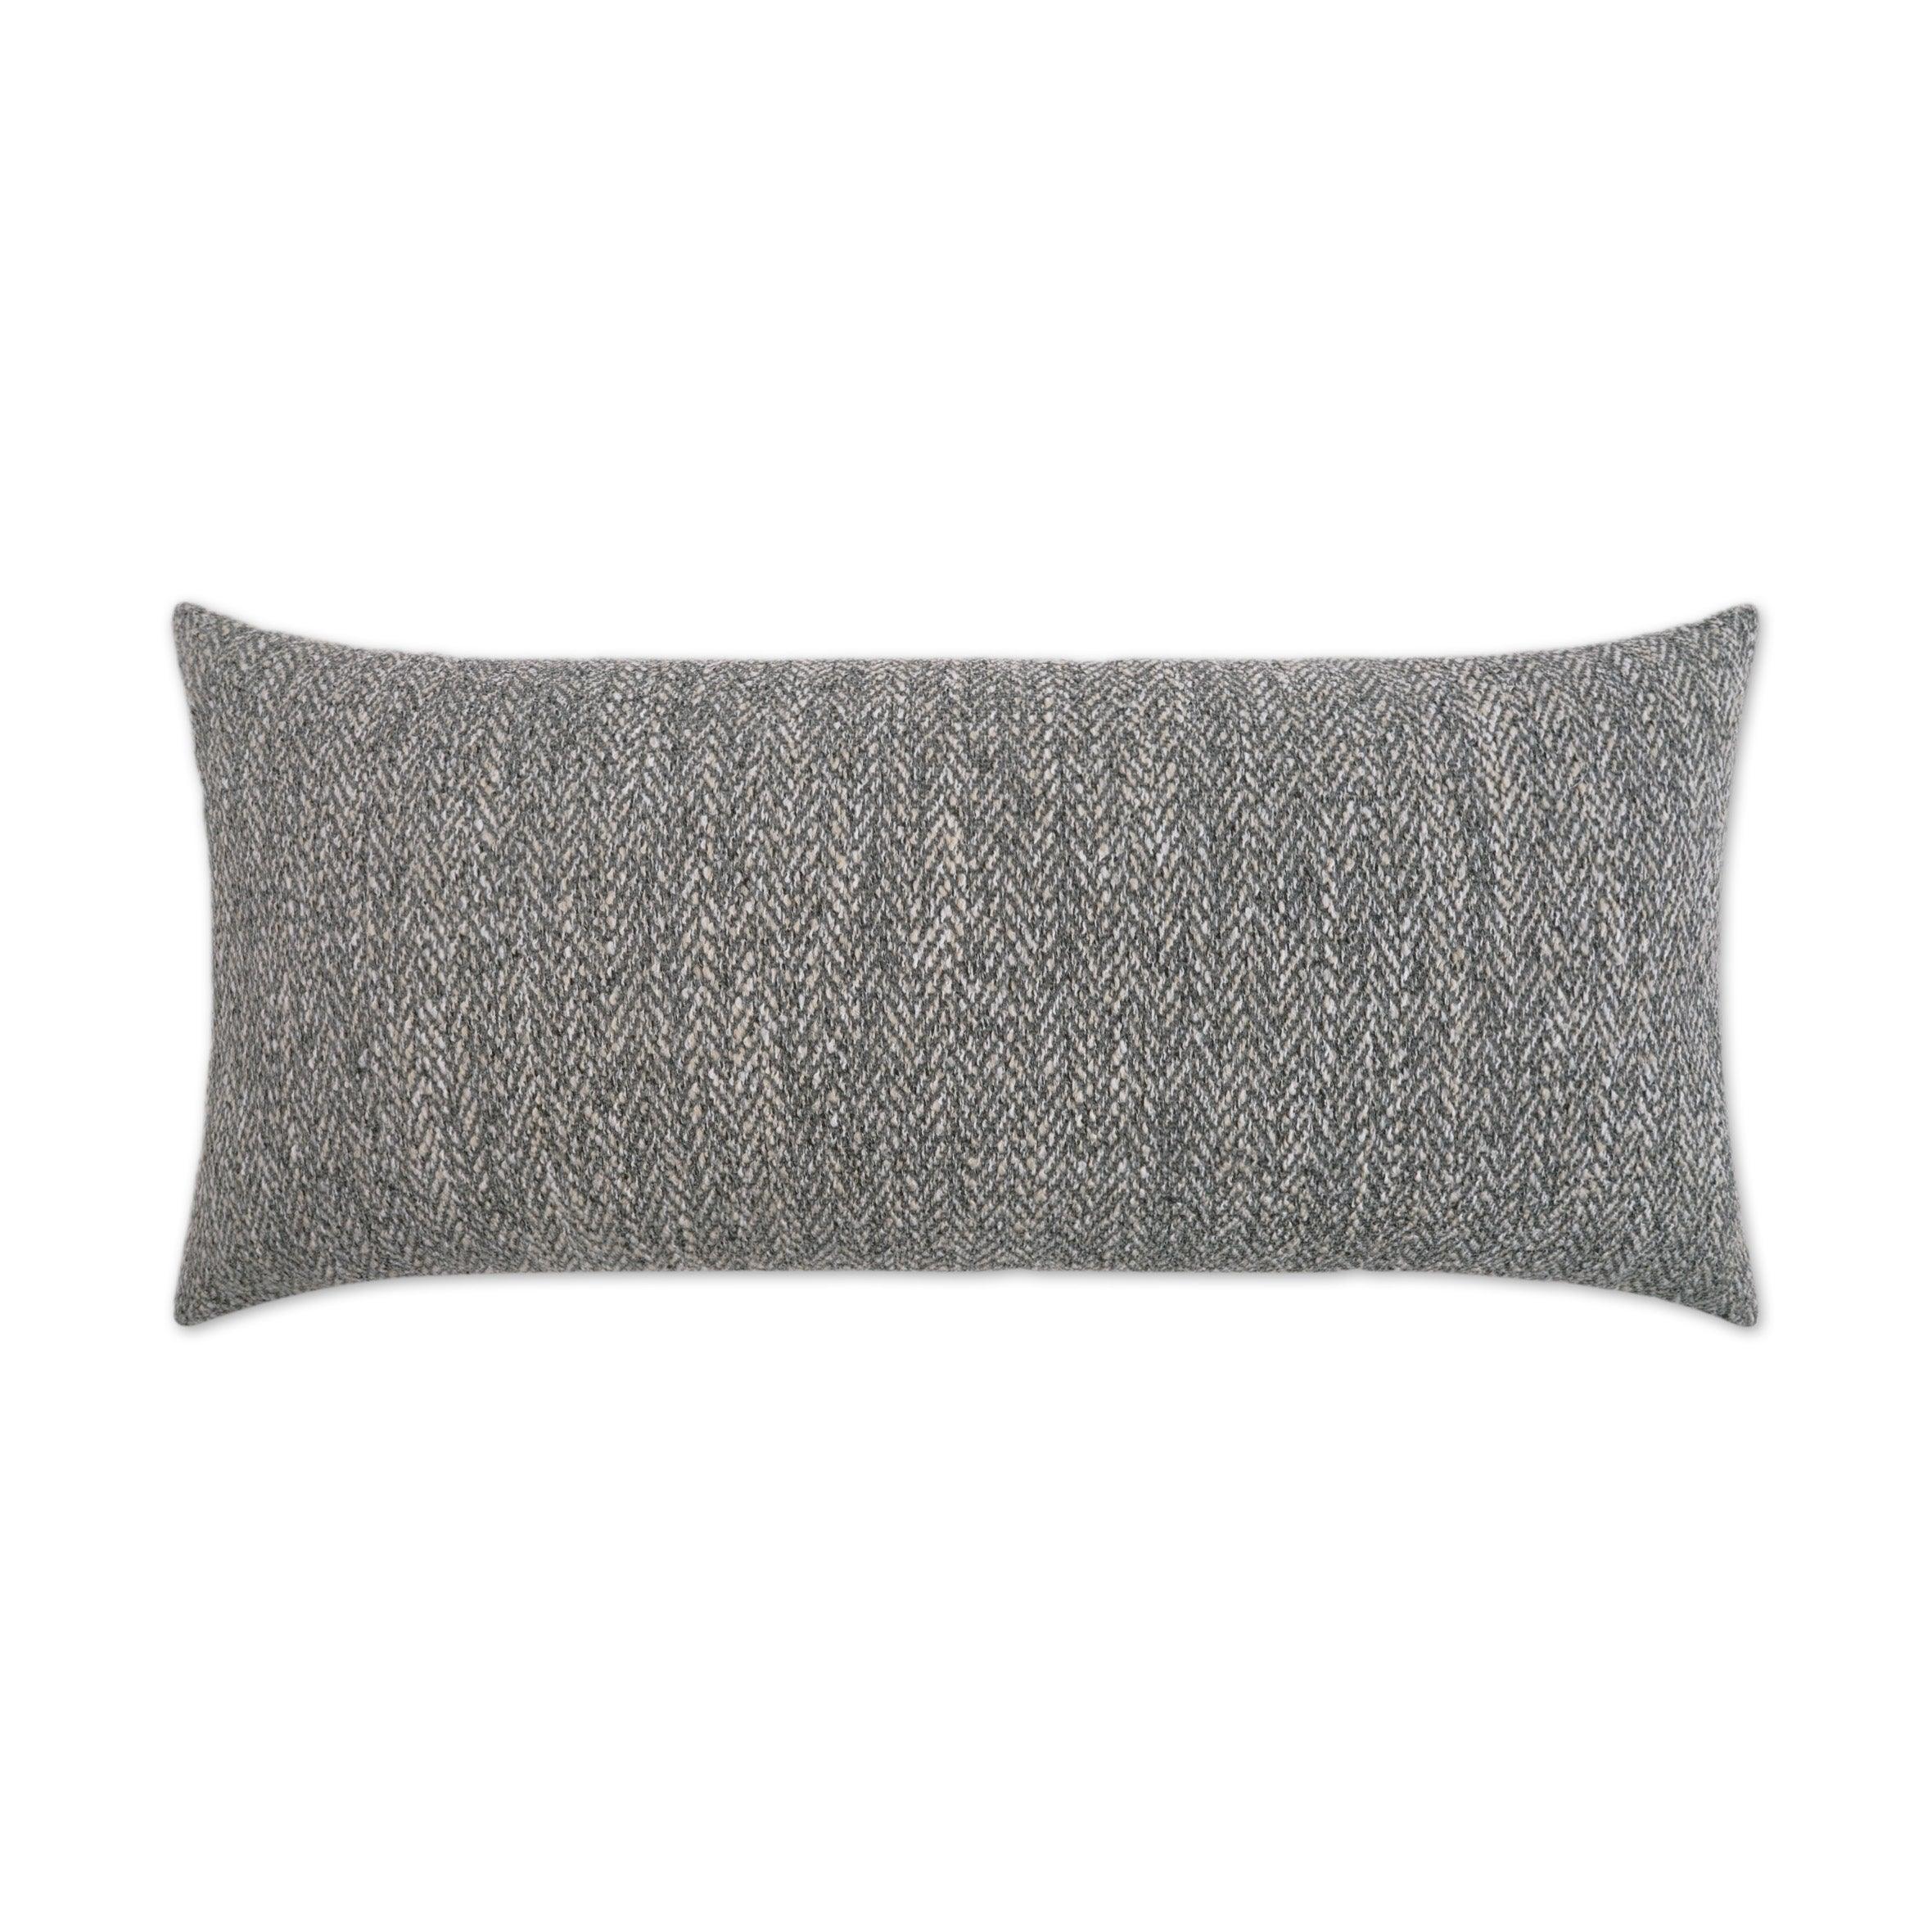 LOOMLAN Outdoor - Outdoor Stratford Lumbar Pillow - Grey - Outdoor Pillows